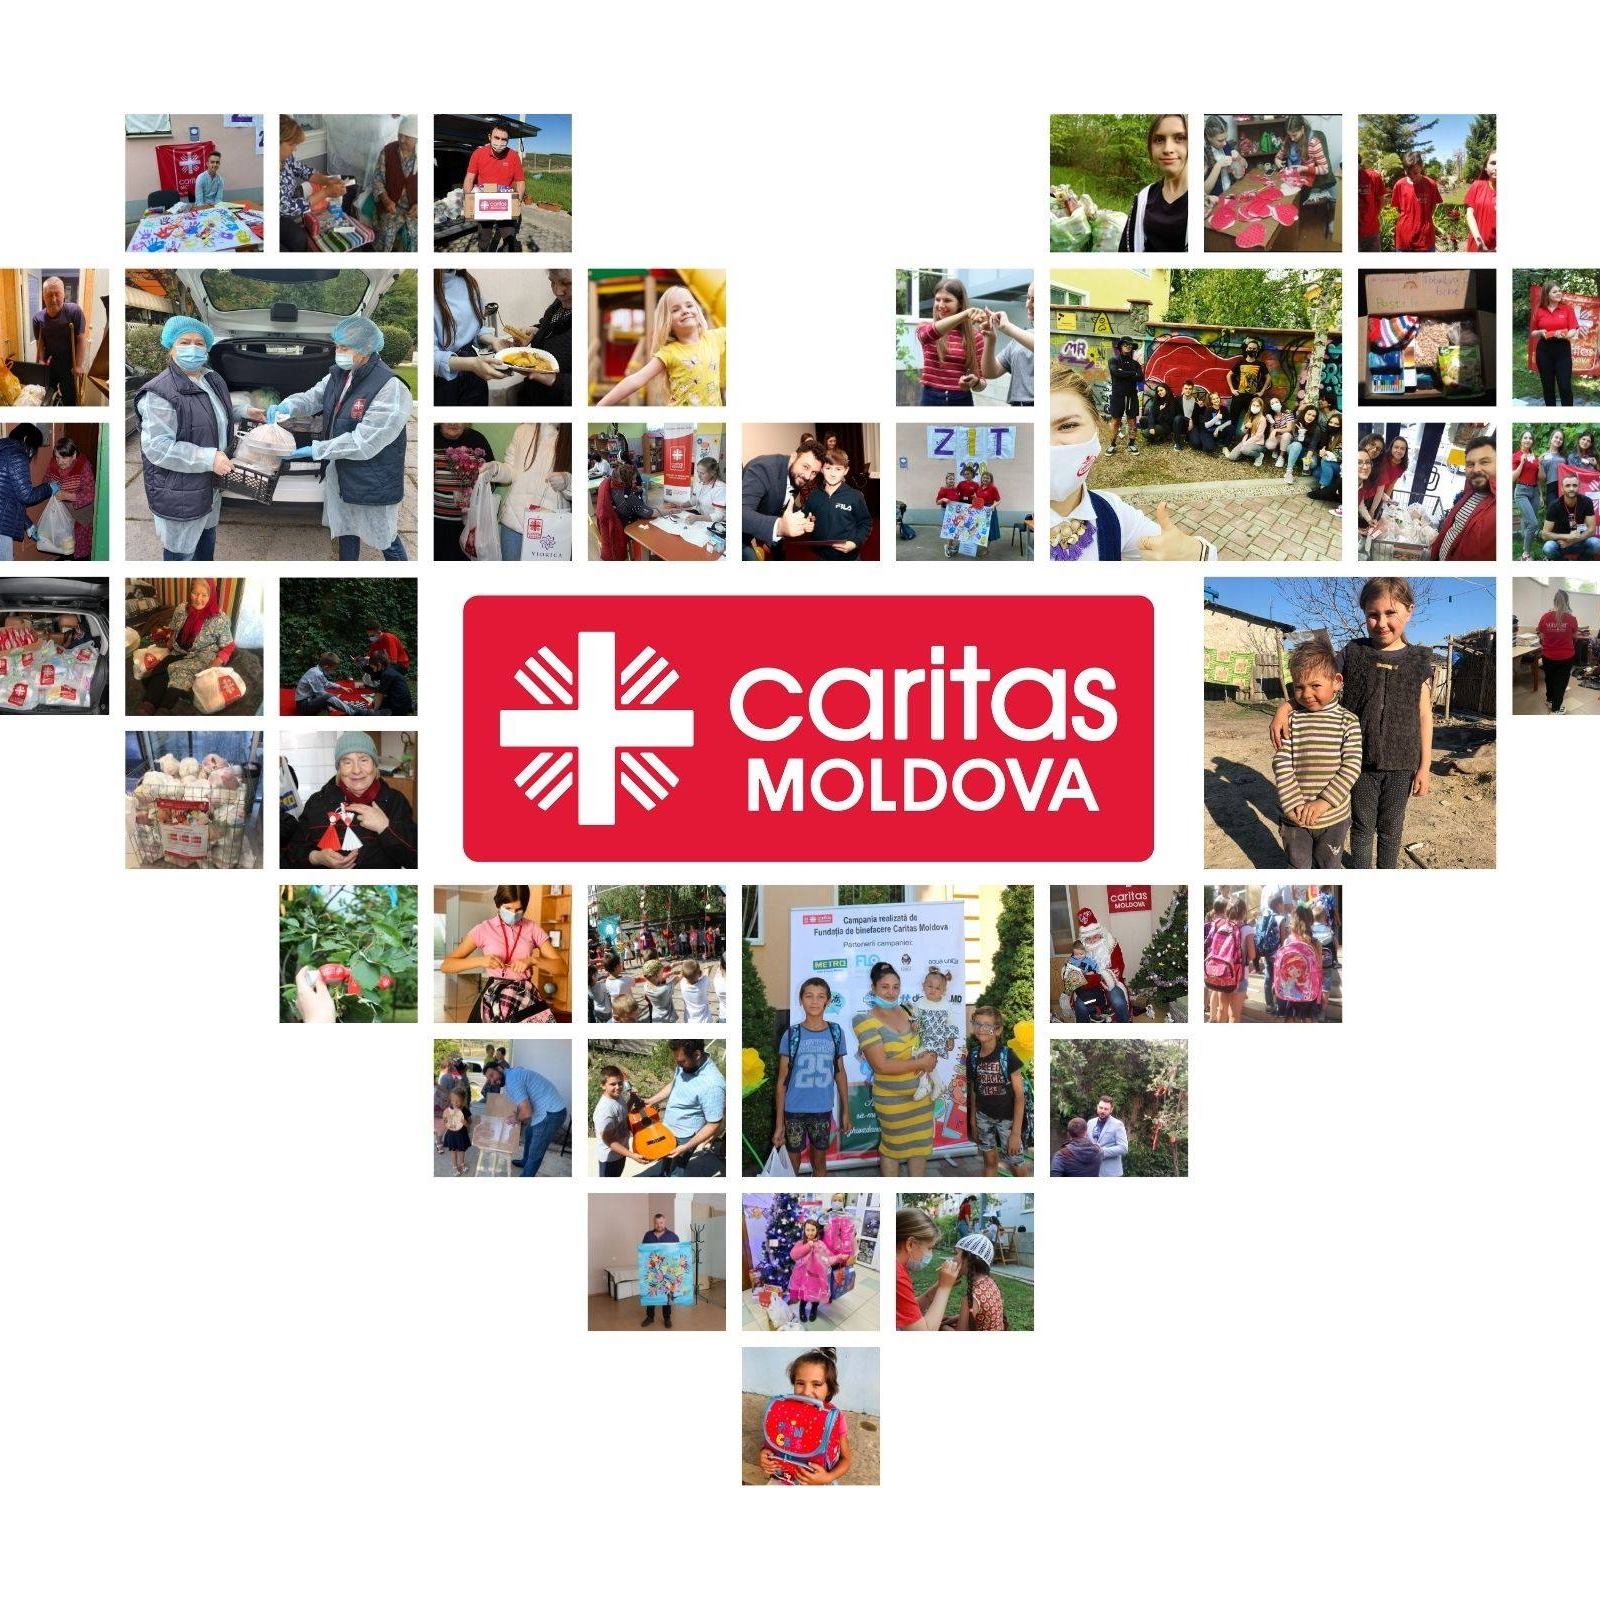 About Caritas Moldova